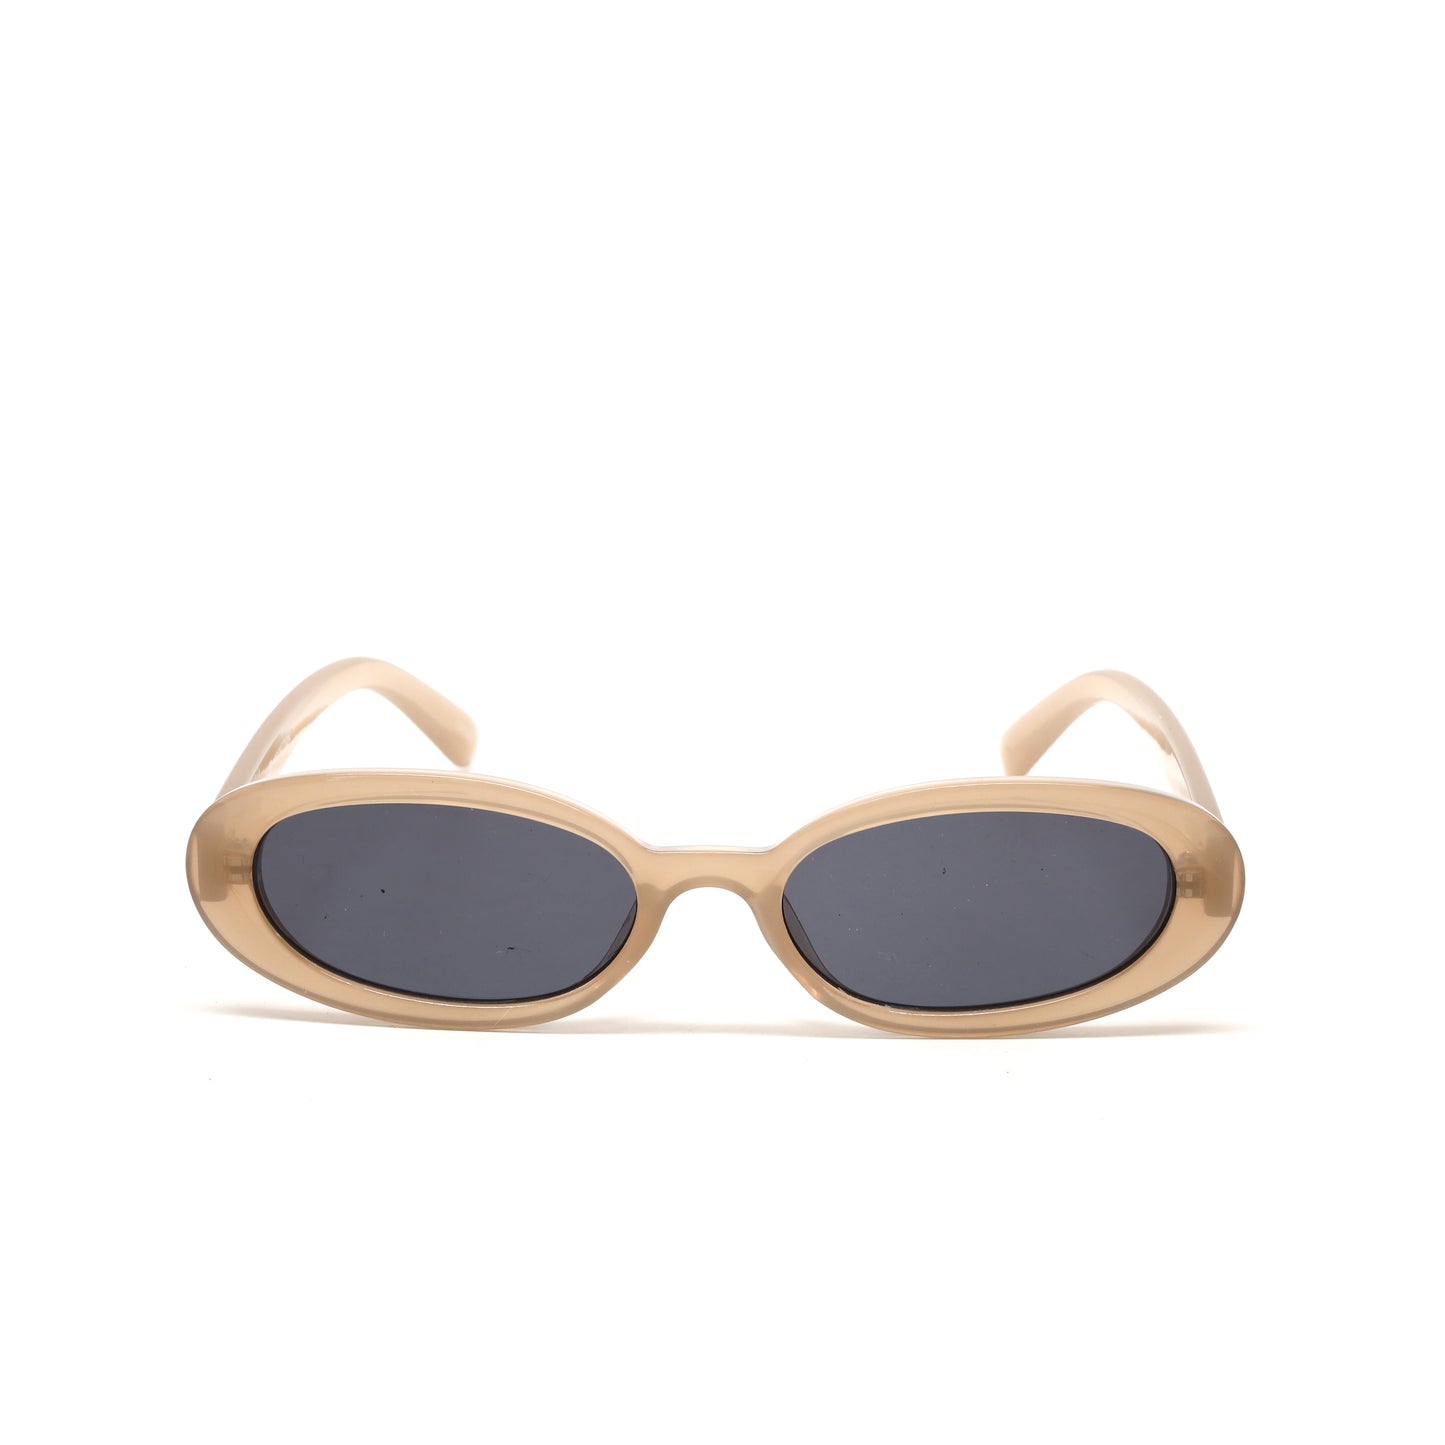 Retro Modern Standard Oval Frame Sunglasses - Tan